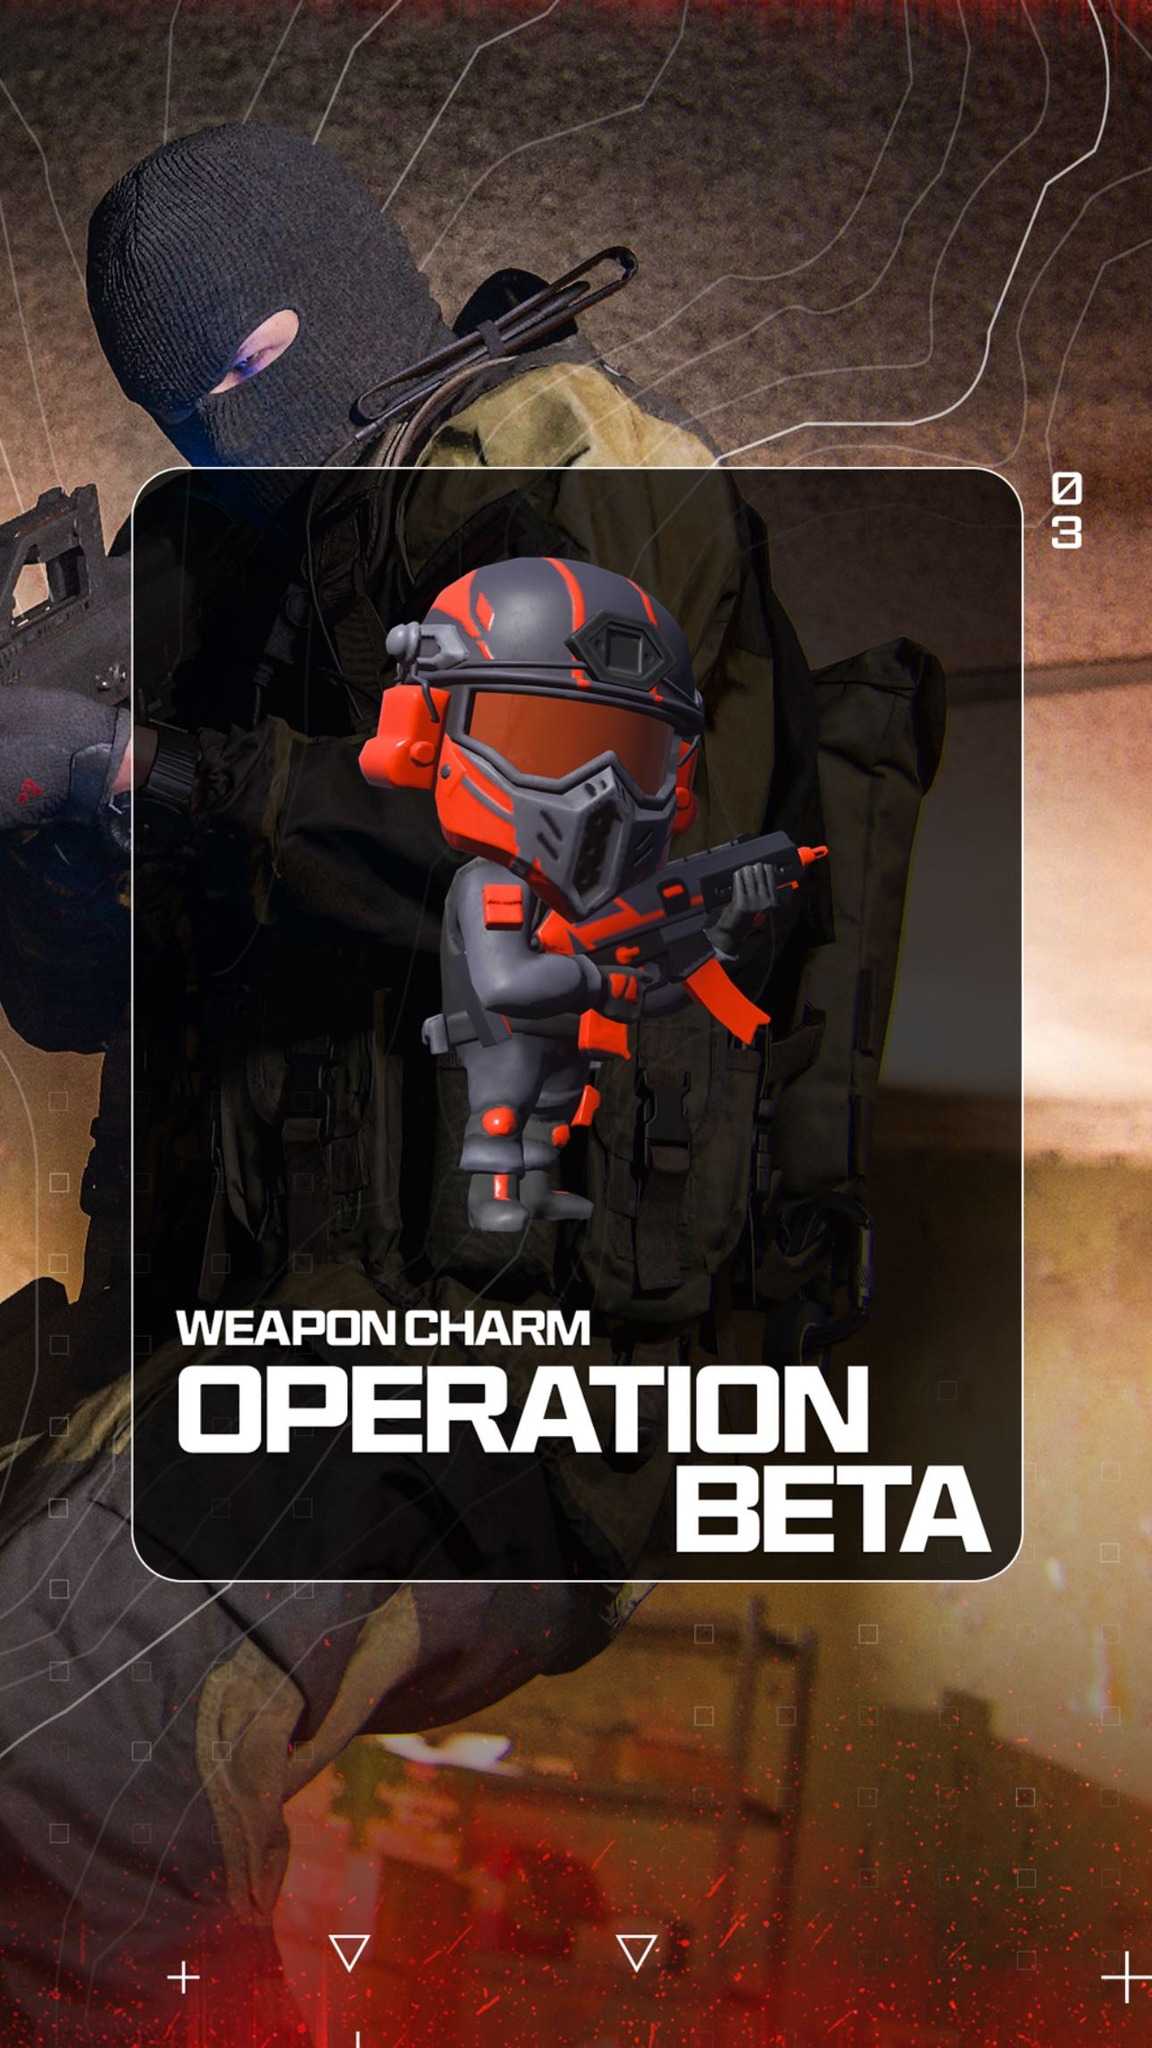 Operator charm from MW3 beta